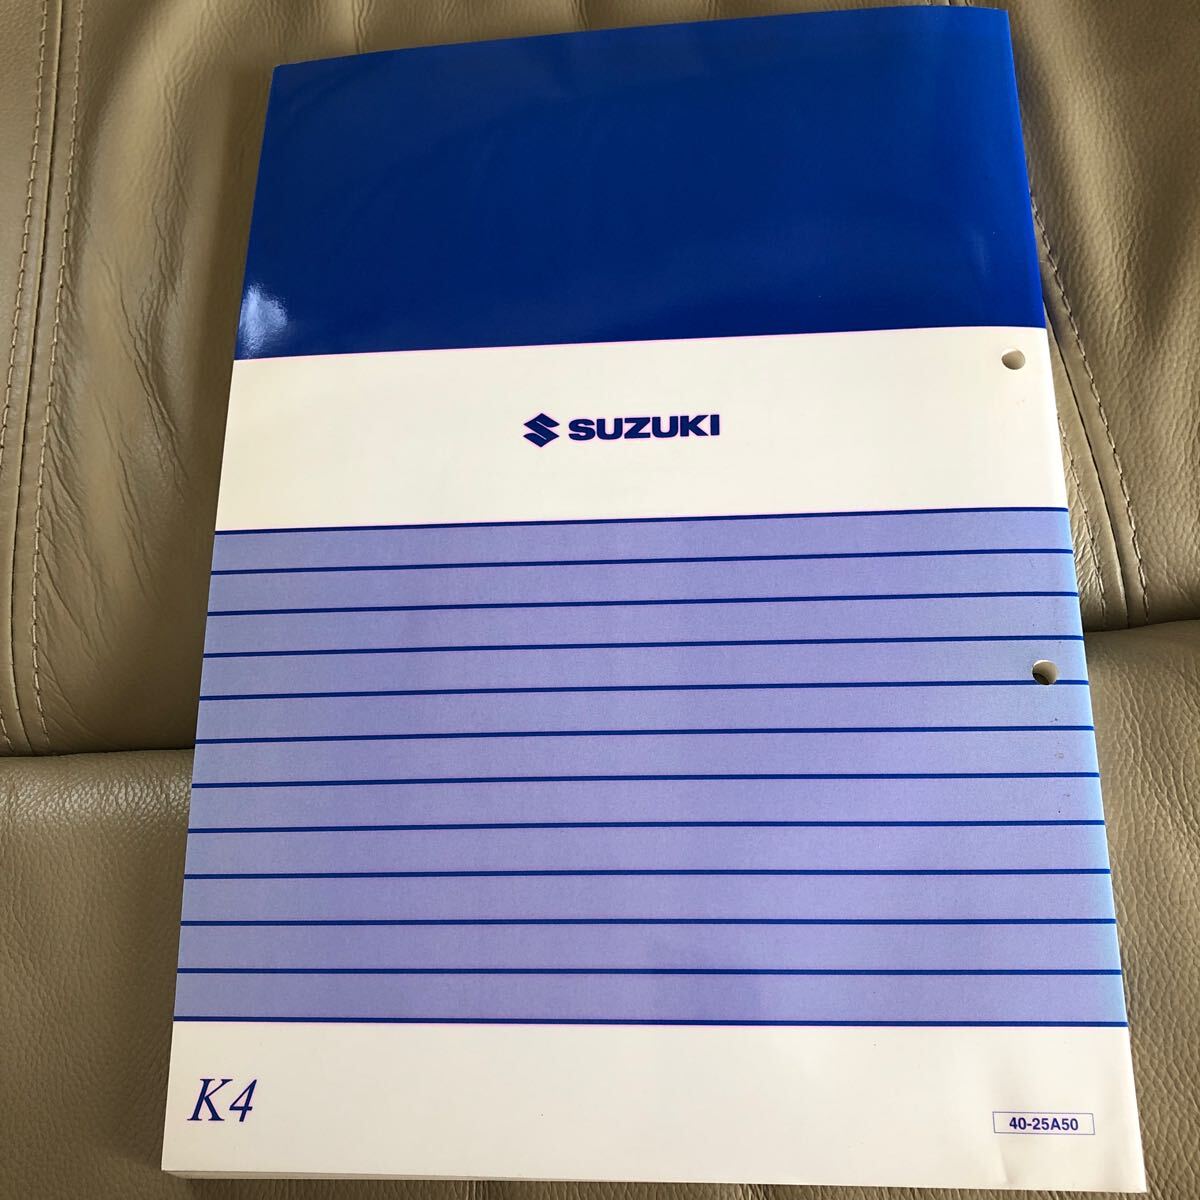 SUZUKI ST250 (BA-NJ4AA) service manual used 